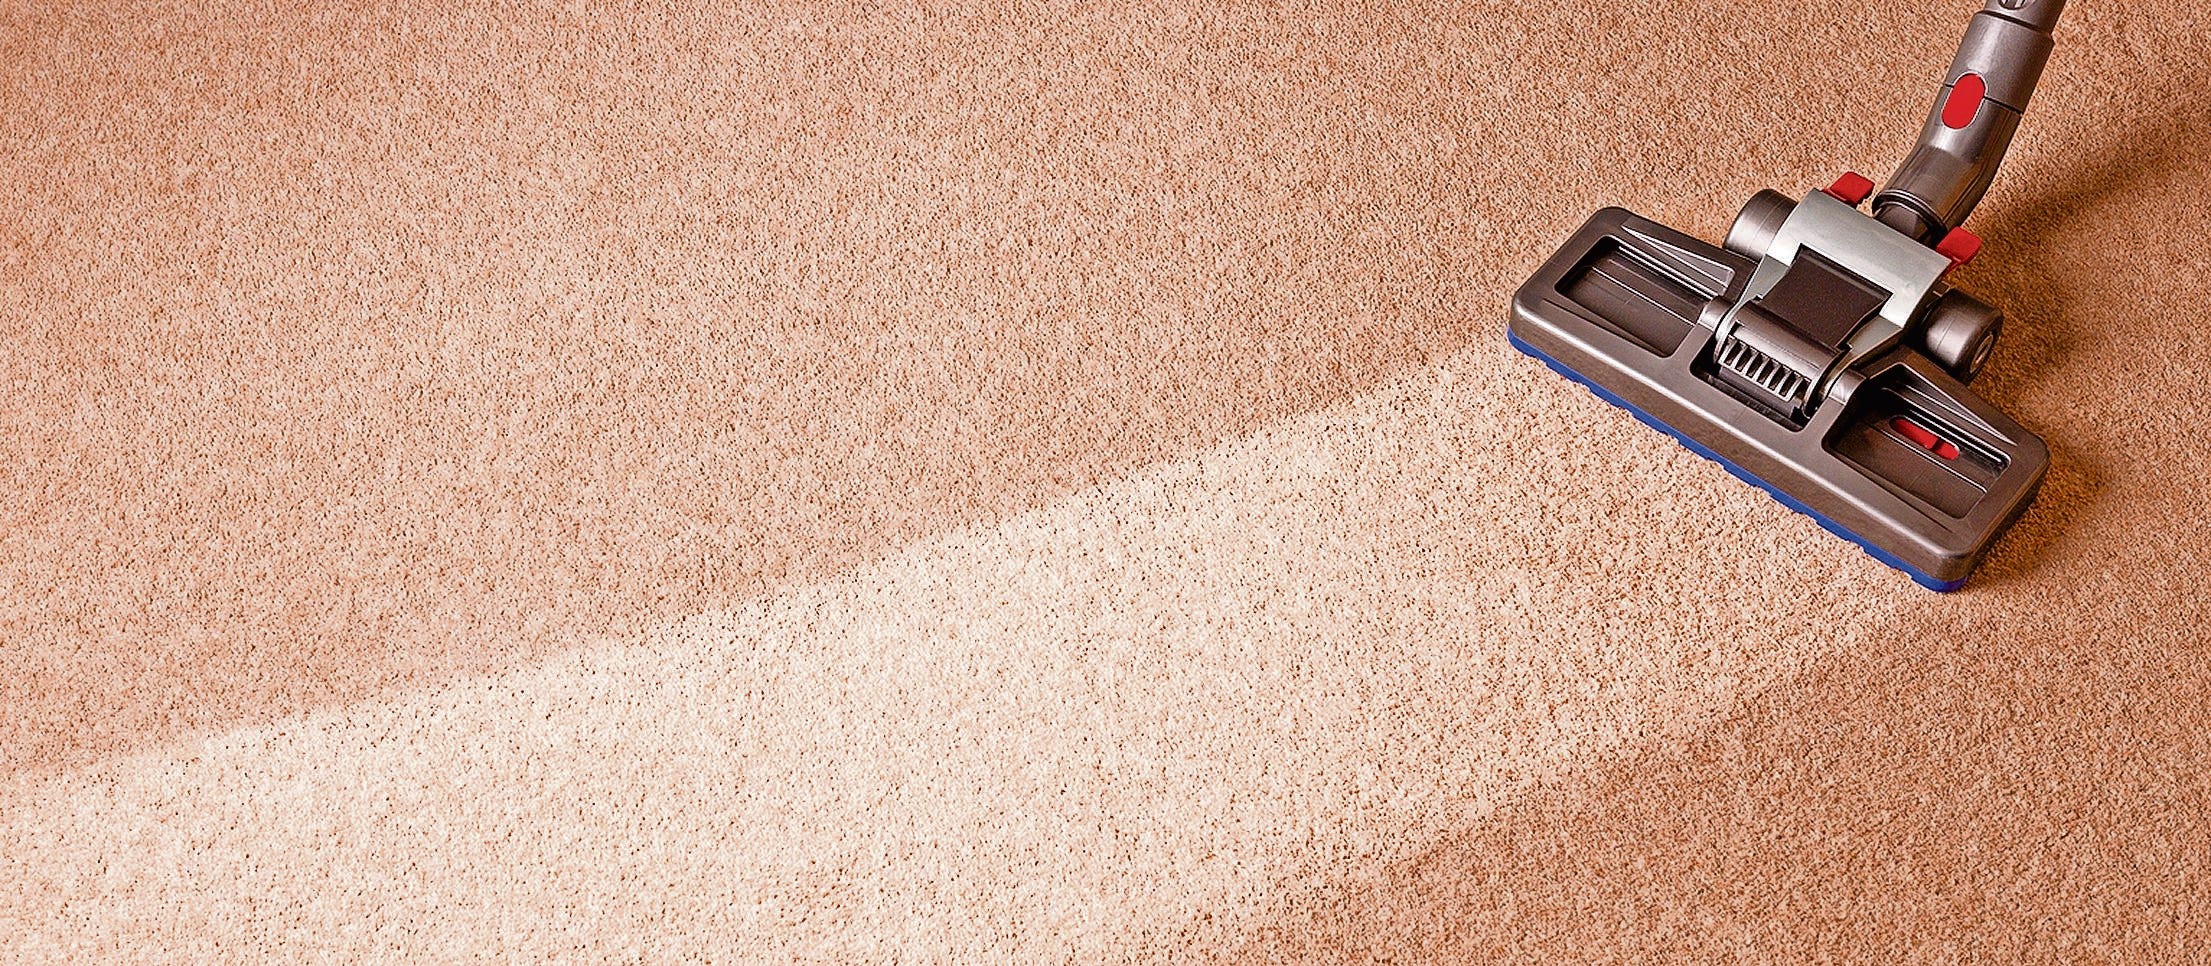 can you steam clean carpets